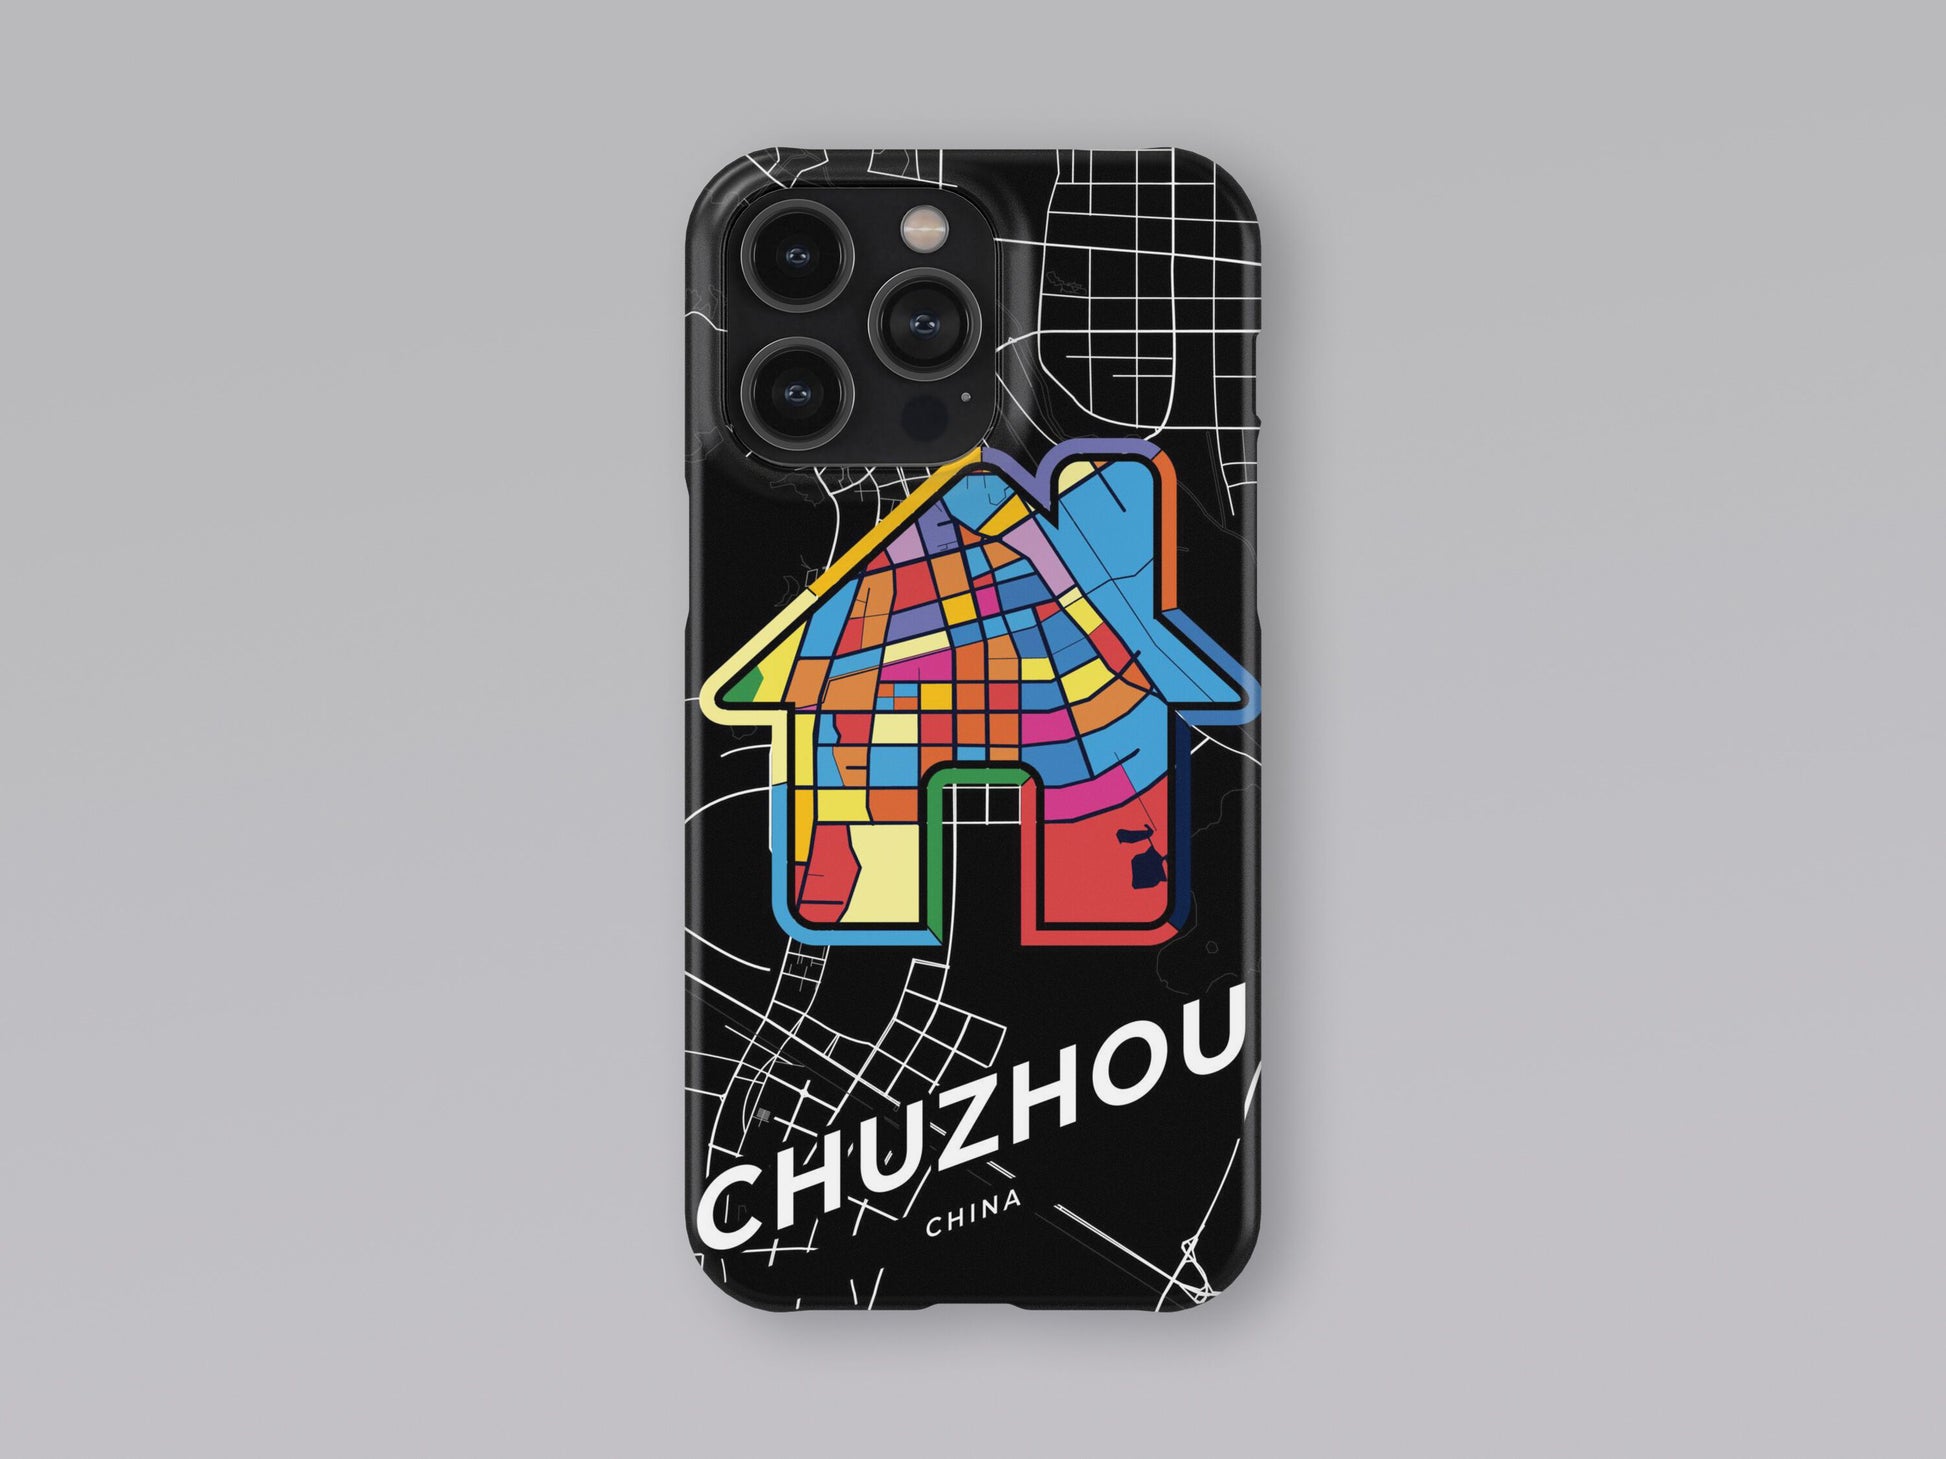 Chuzhou China slim phone case with colorful icon. Birthday, wedding or housewarming gift. Couple match cases. 3